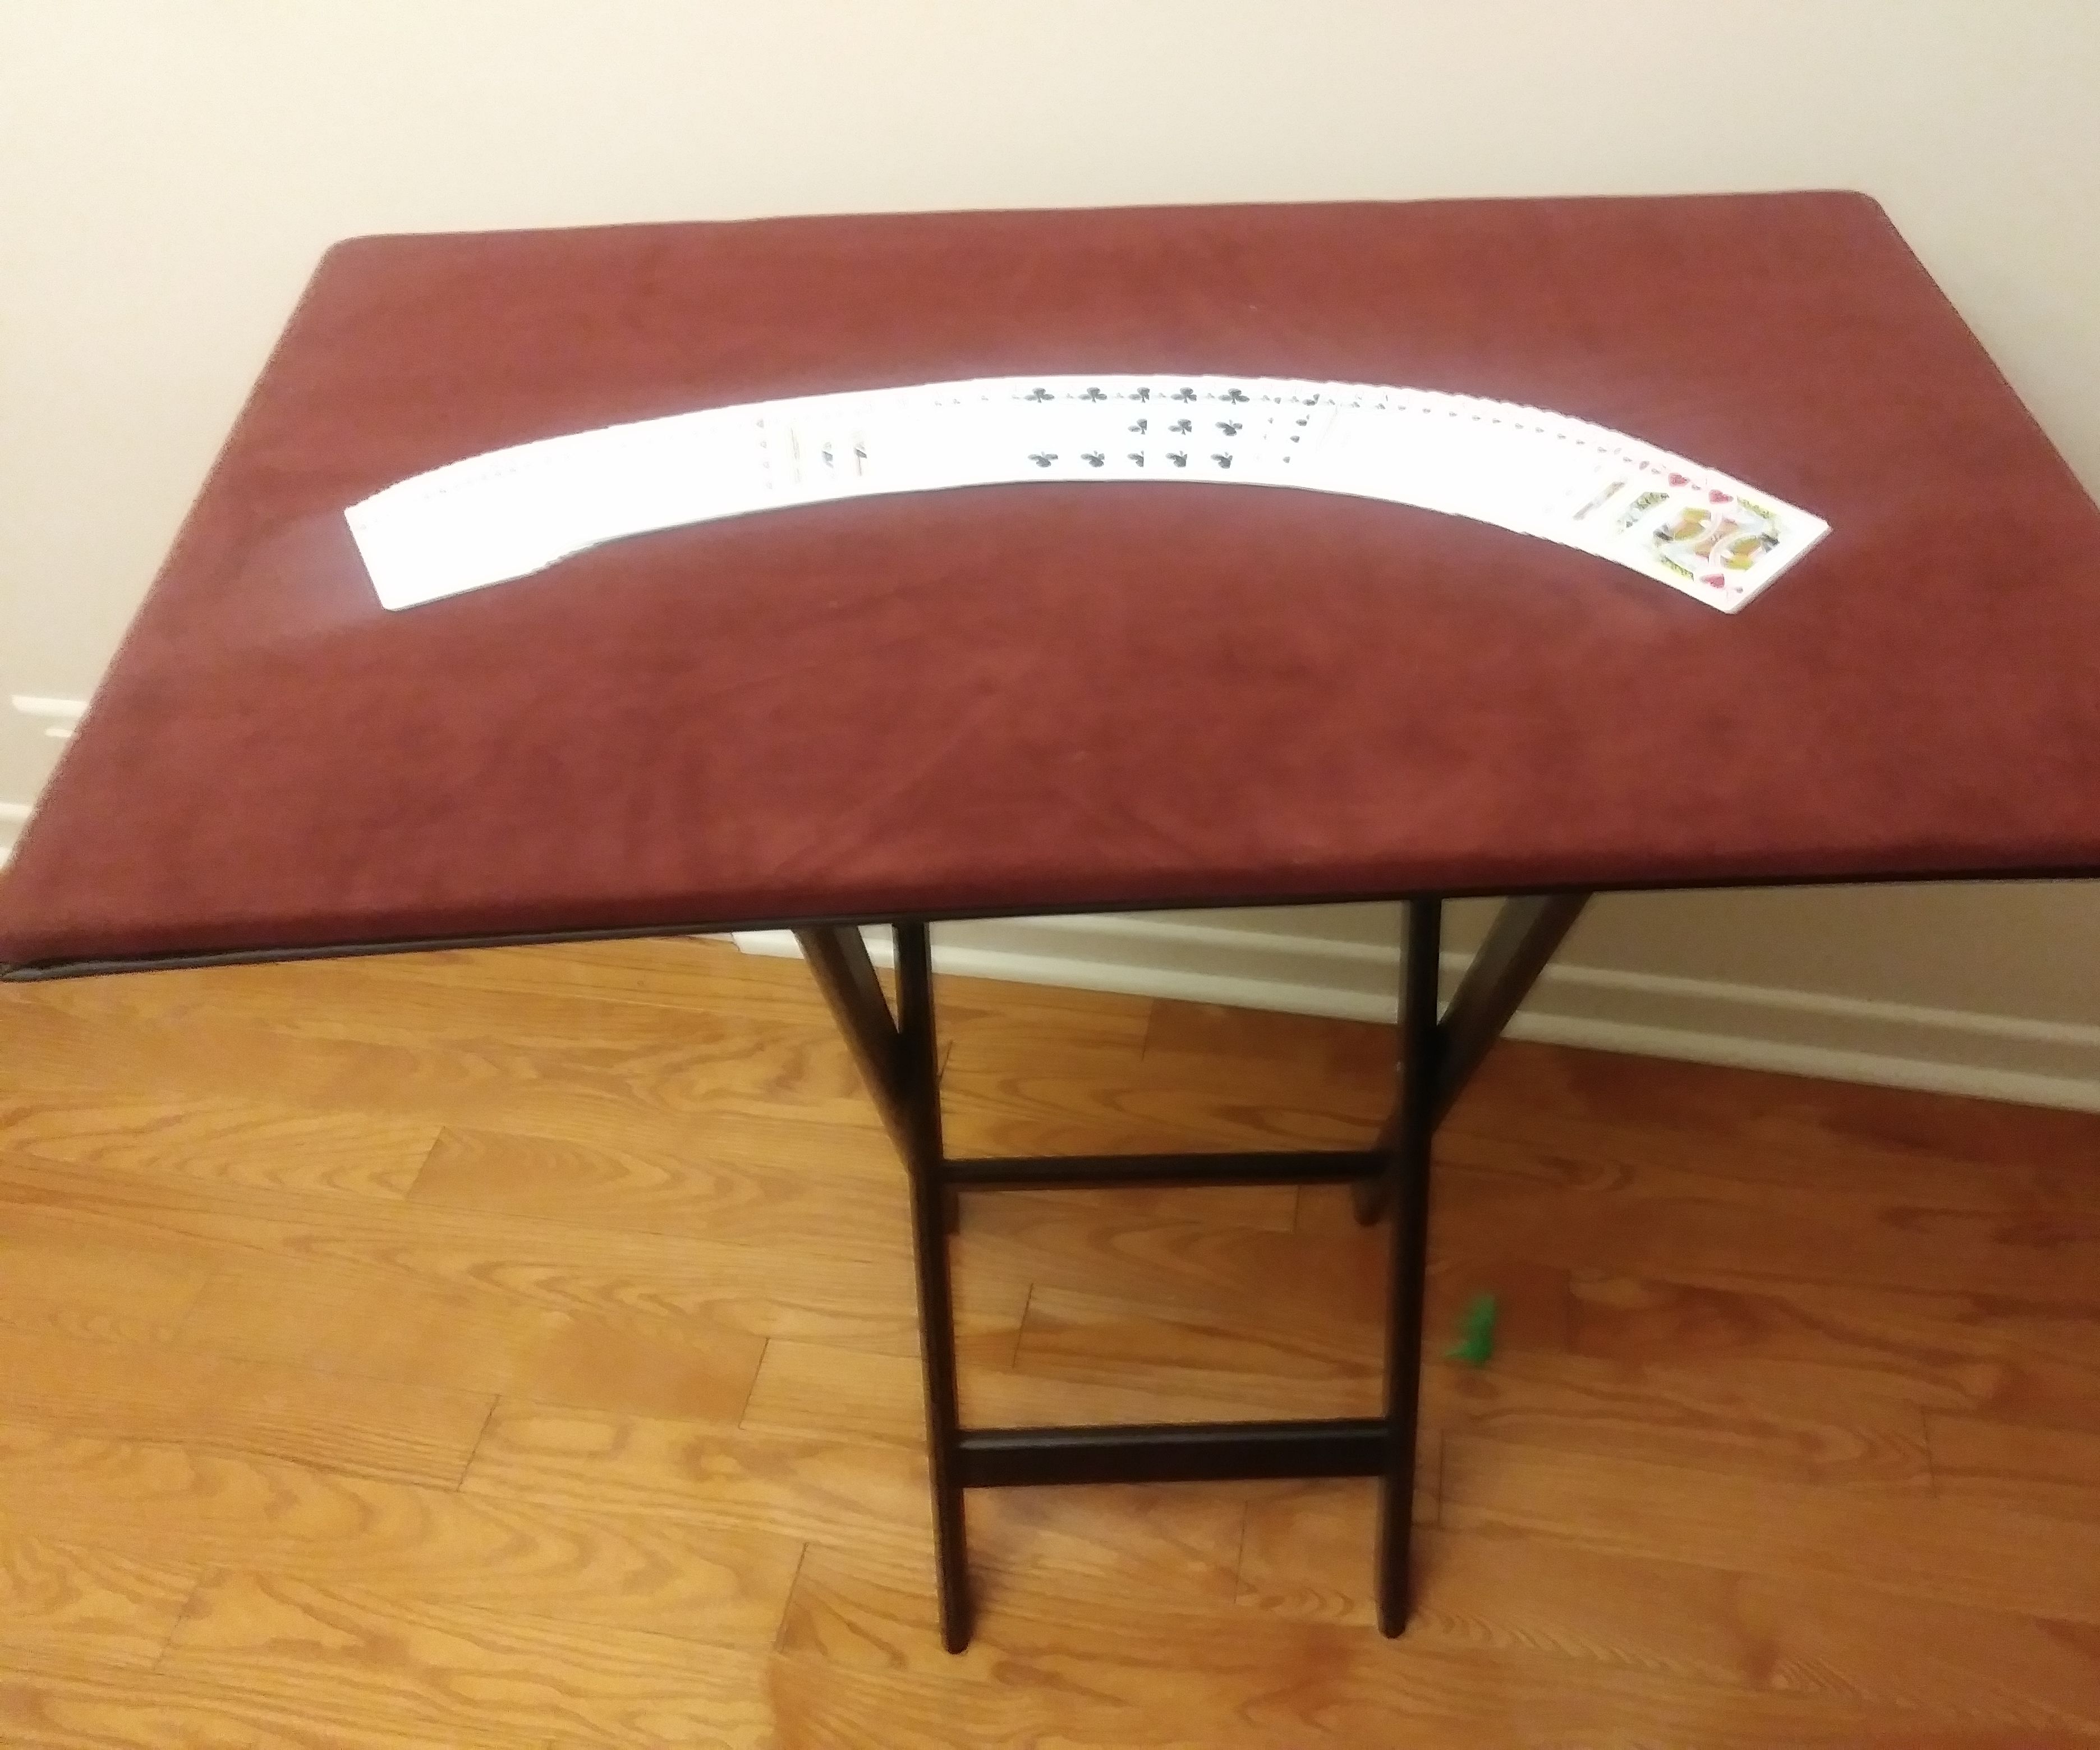 Portable Magician's Table